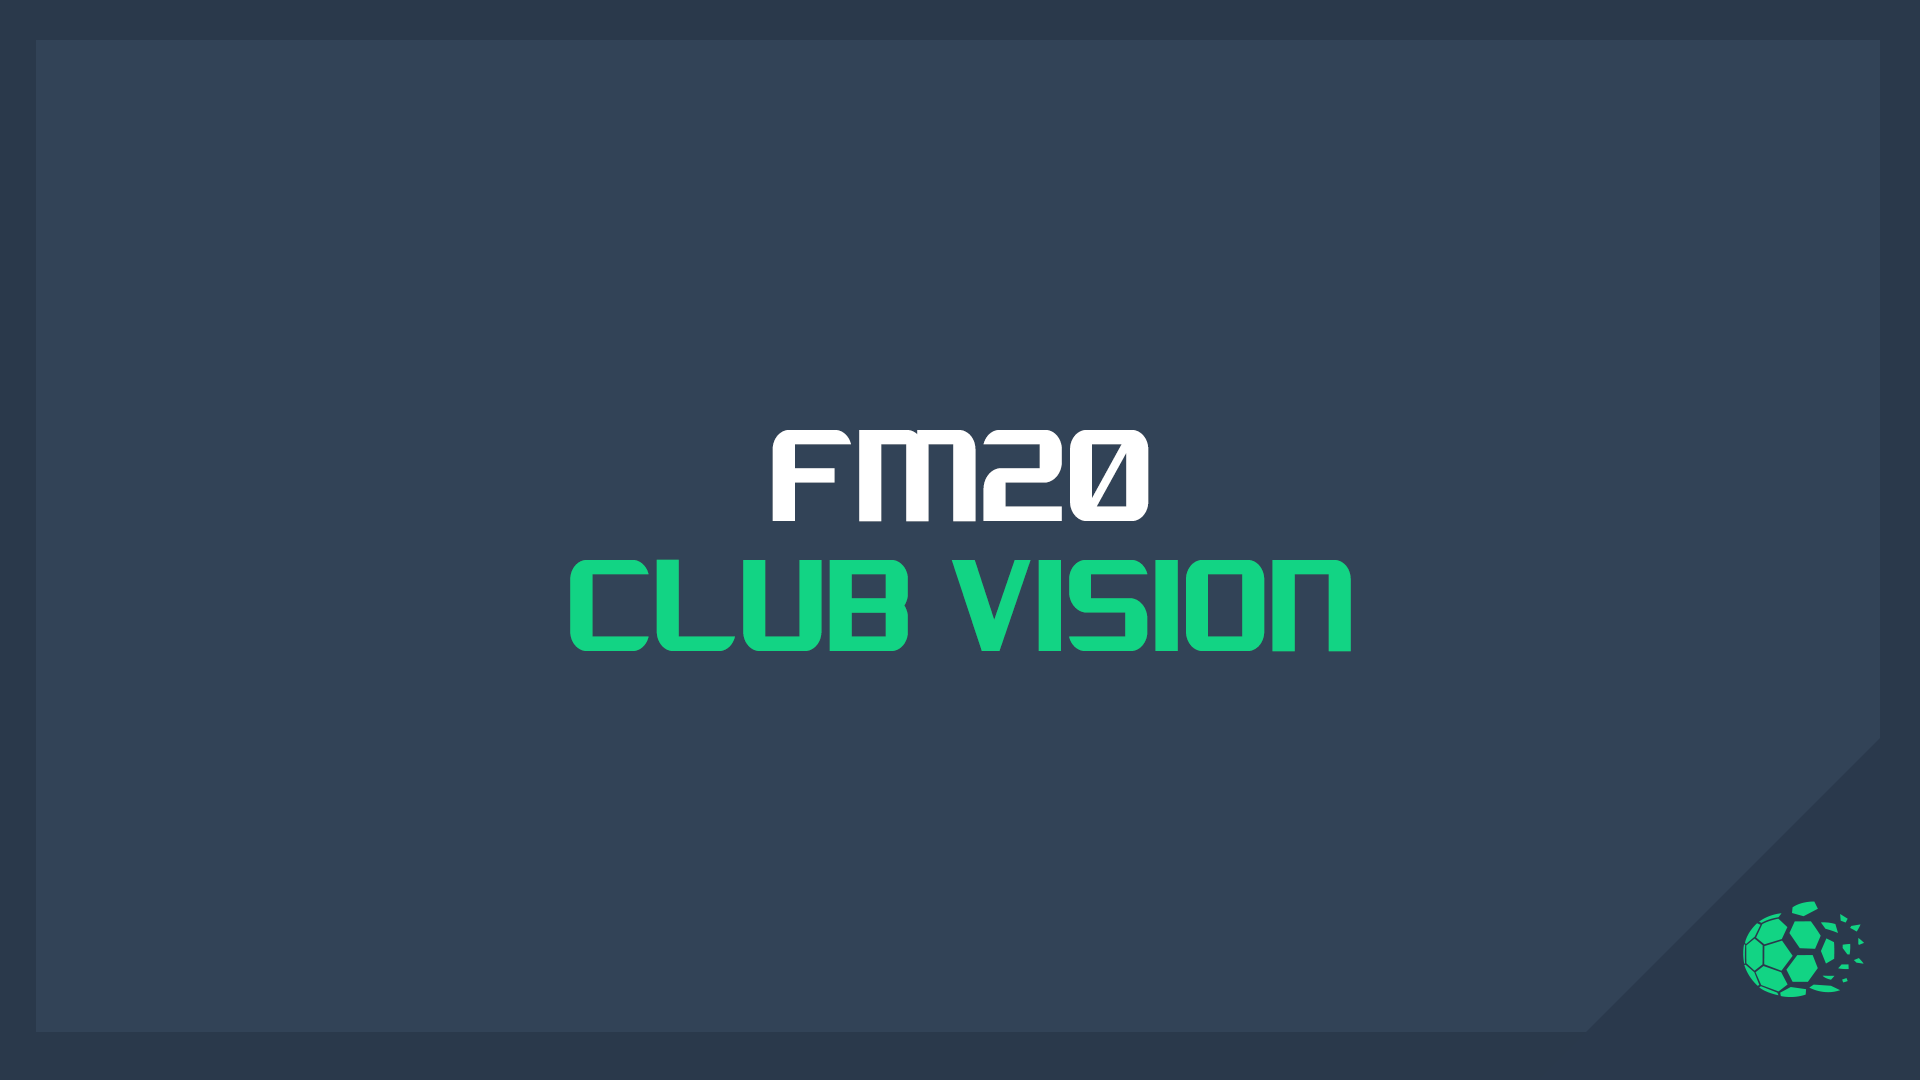 FM20 Headline Features: Club Vision